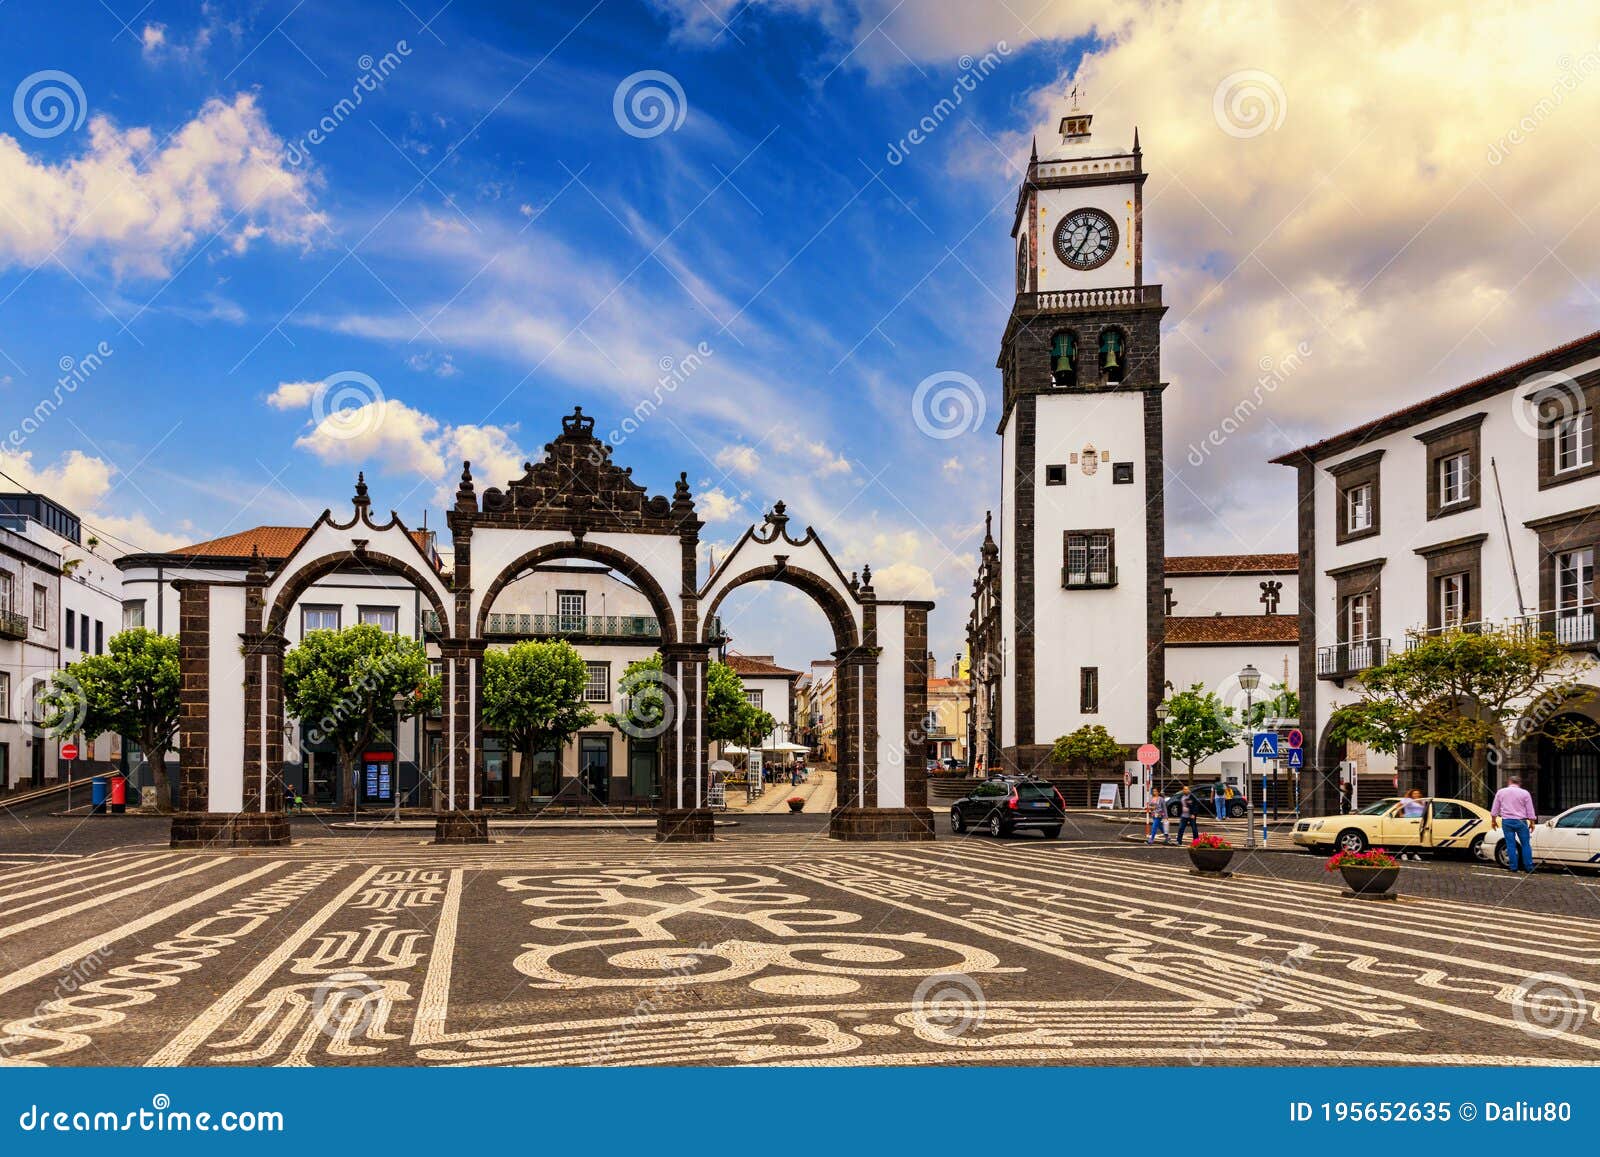 portas da cidade, the city  of ponta delgada in sao miguel island in azores, portugal. portas da cidade (gates to the city